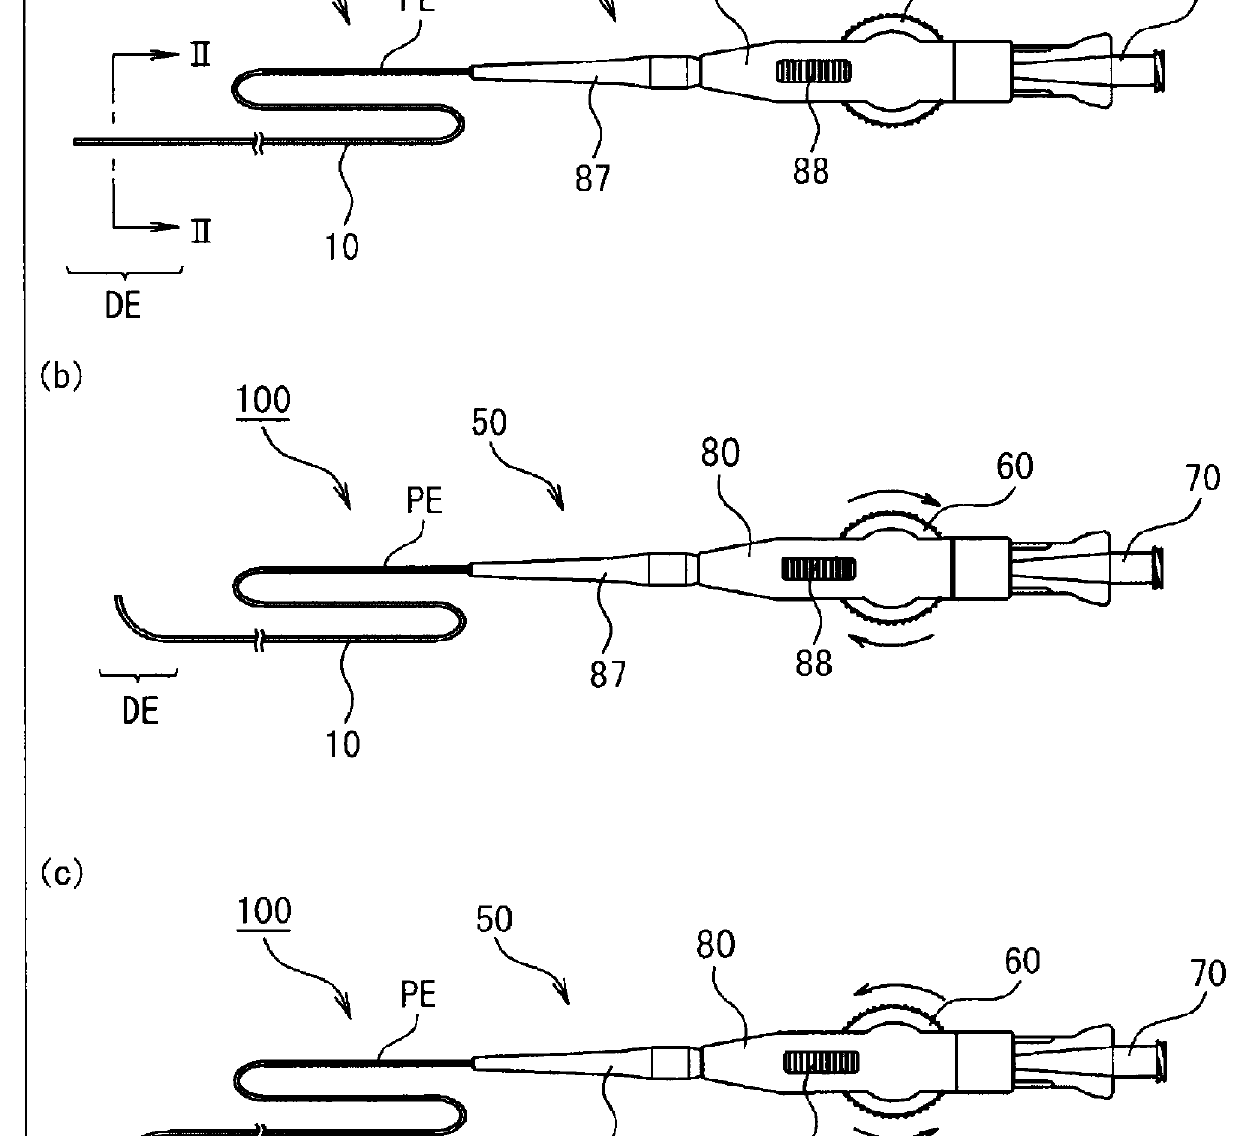 Catheter, catheter manipulation part, and catheter manufacturing method